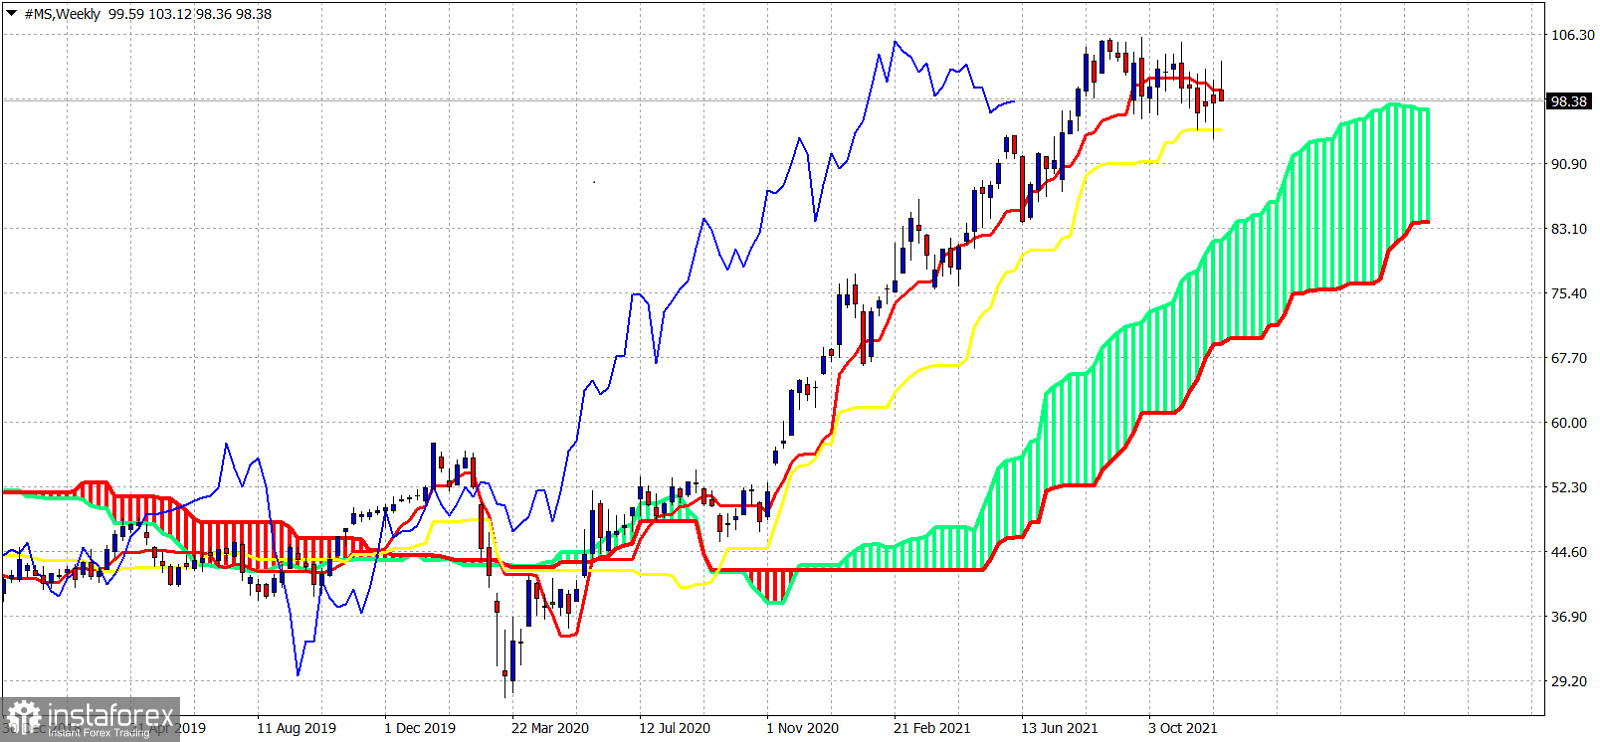 Ichimoku cloud indicator analysis on MS stock price.